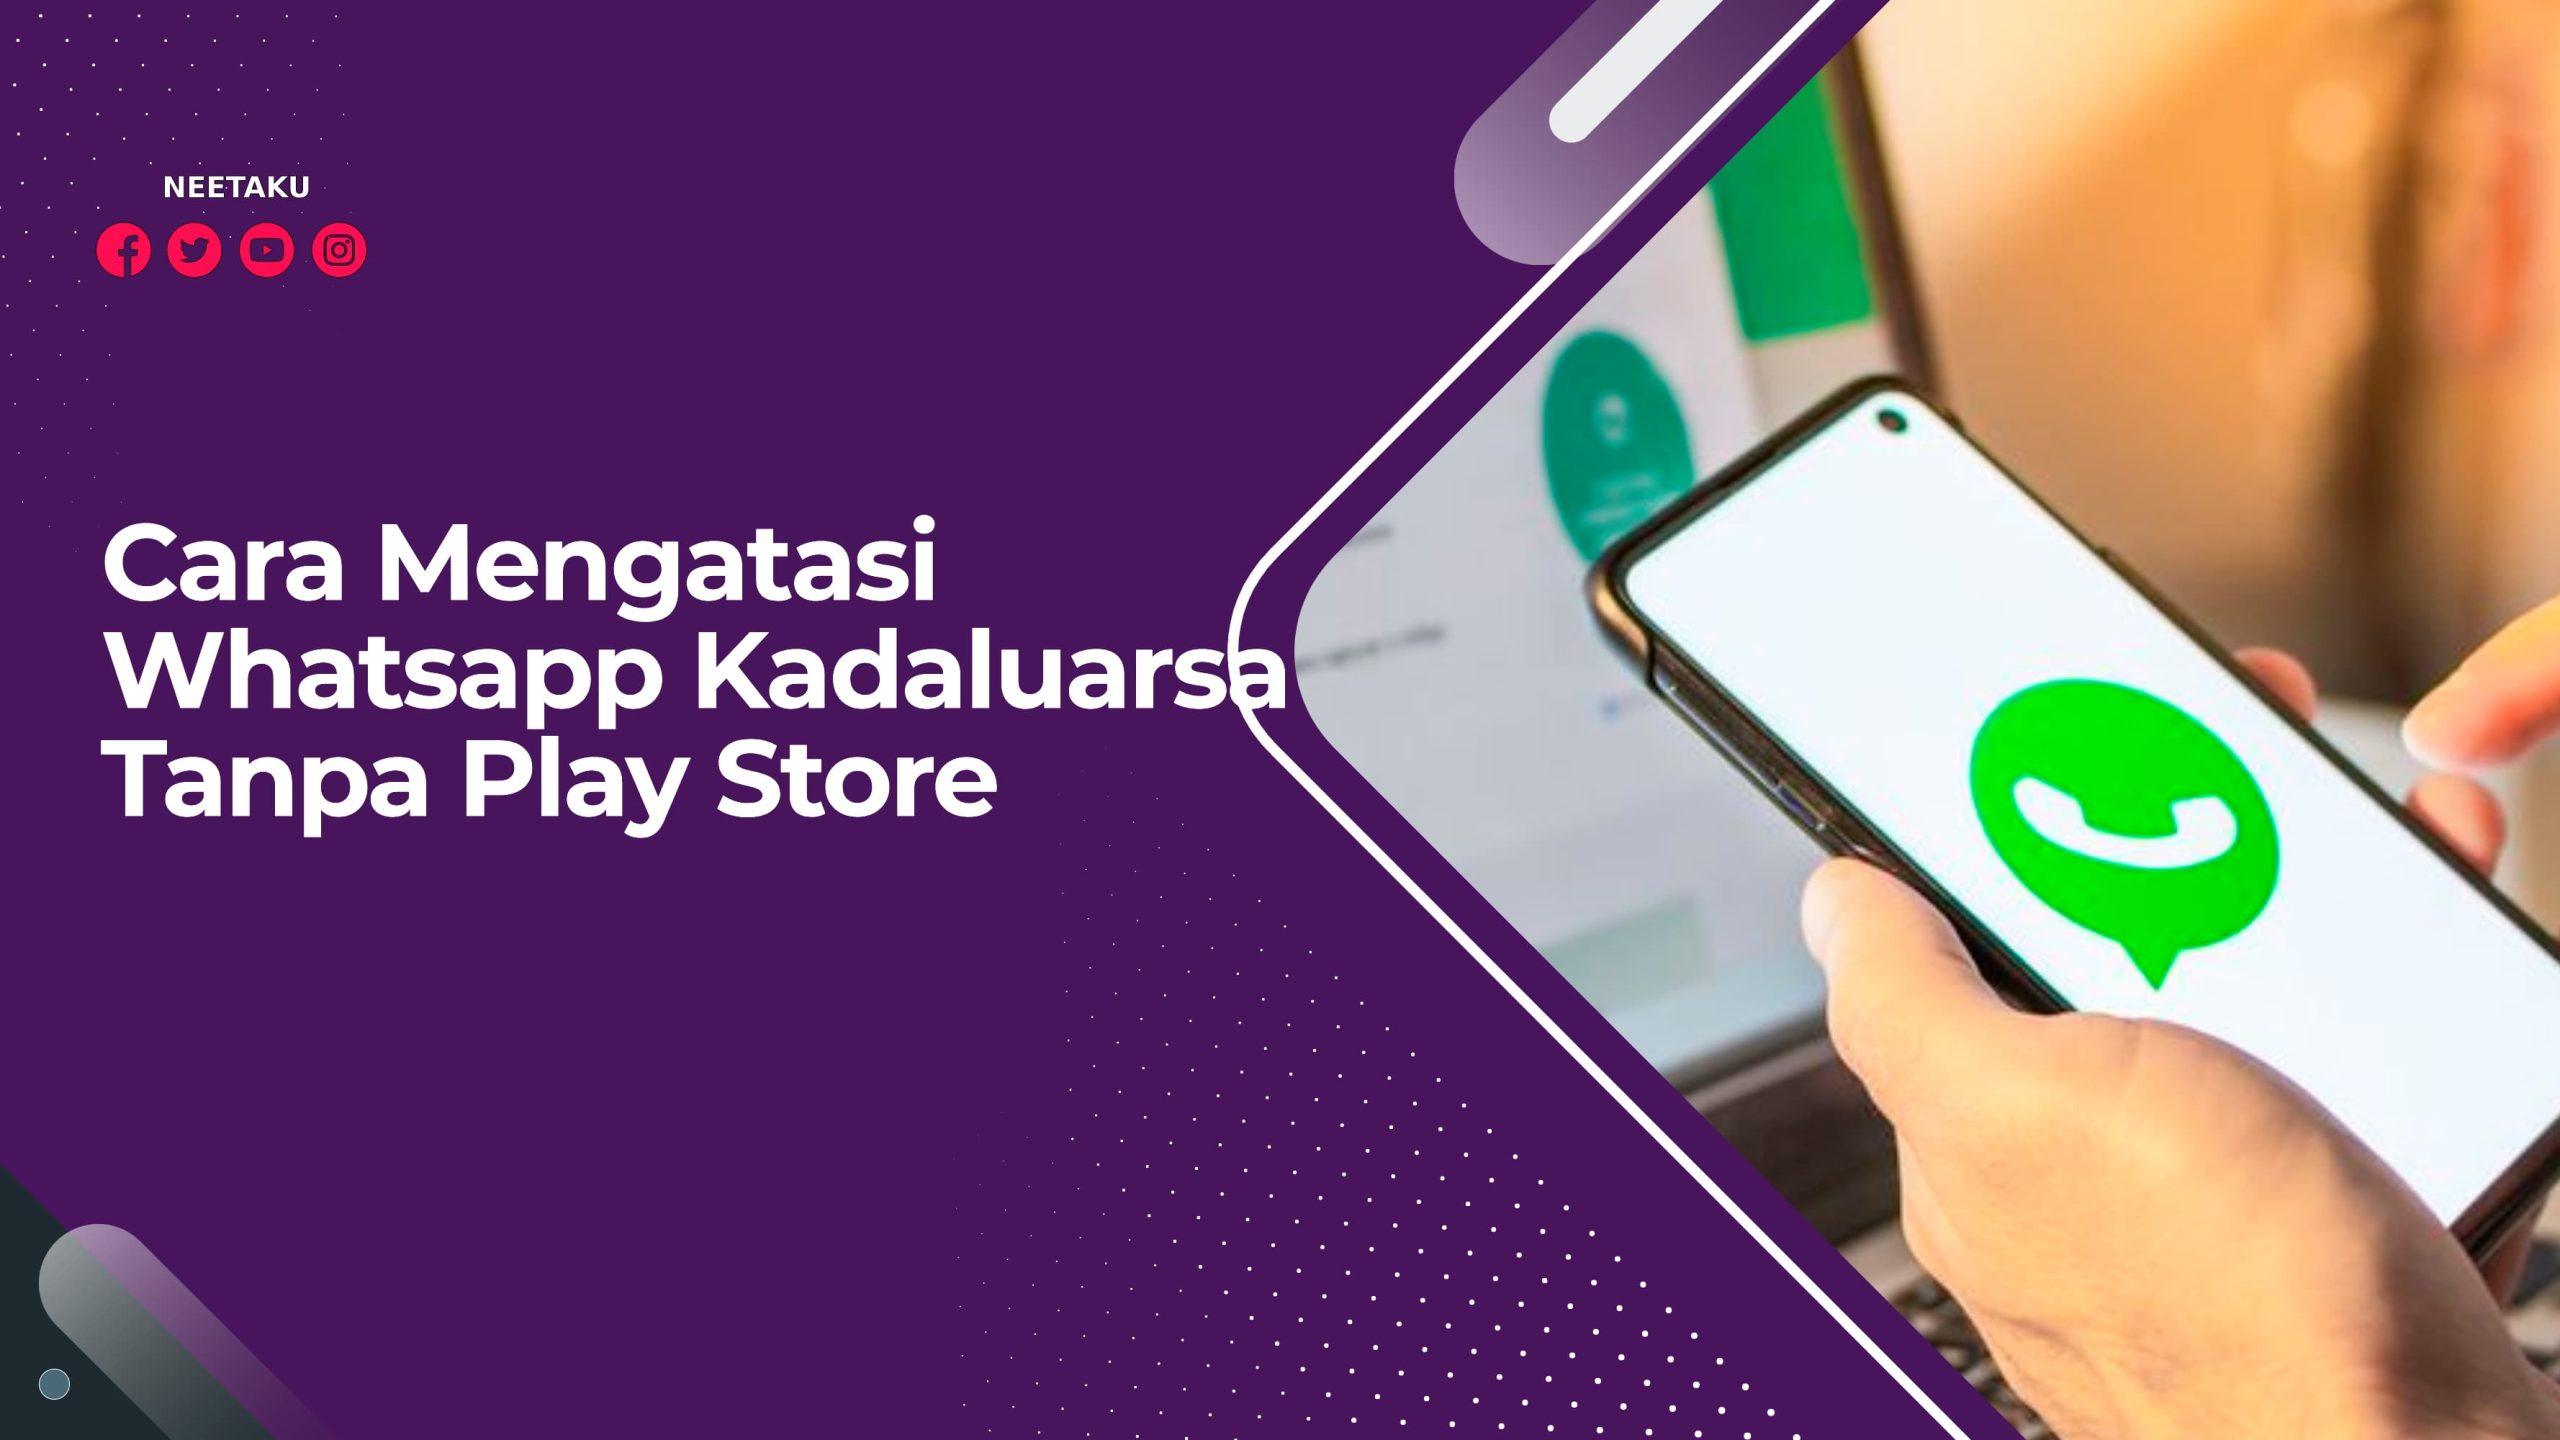 Cara Mengatasi Whatsapp Kadaluarsa Tanpa Play Store